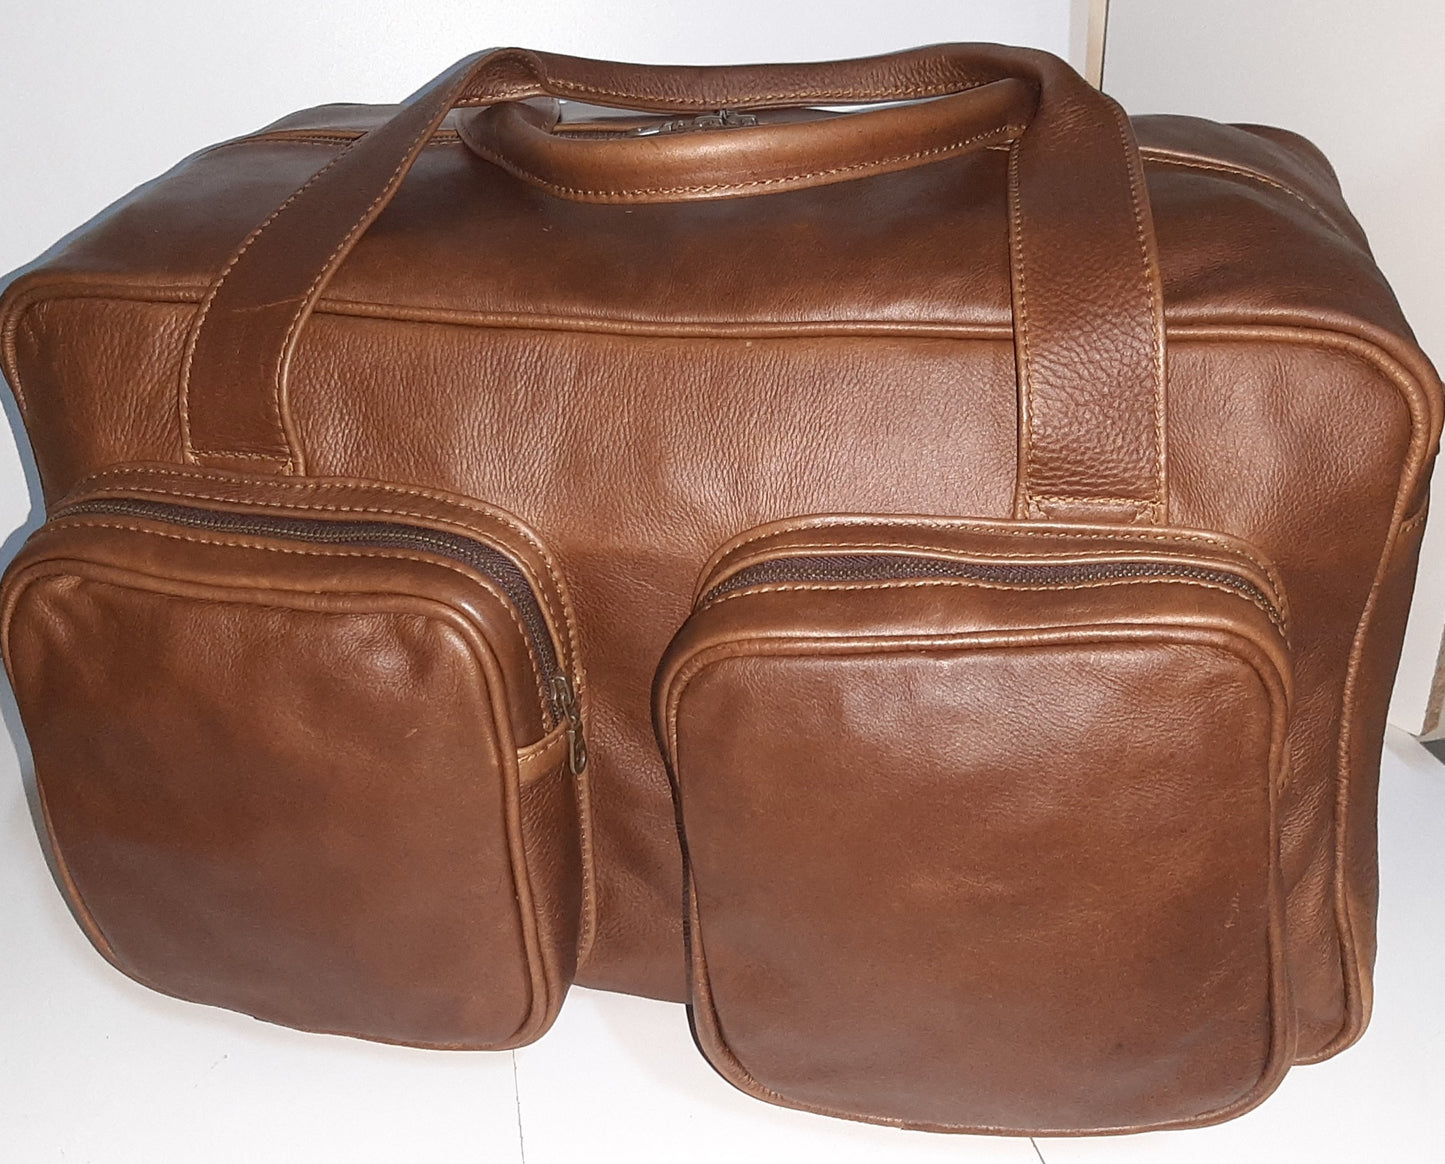 Centurion travel bags - cape Masai leather